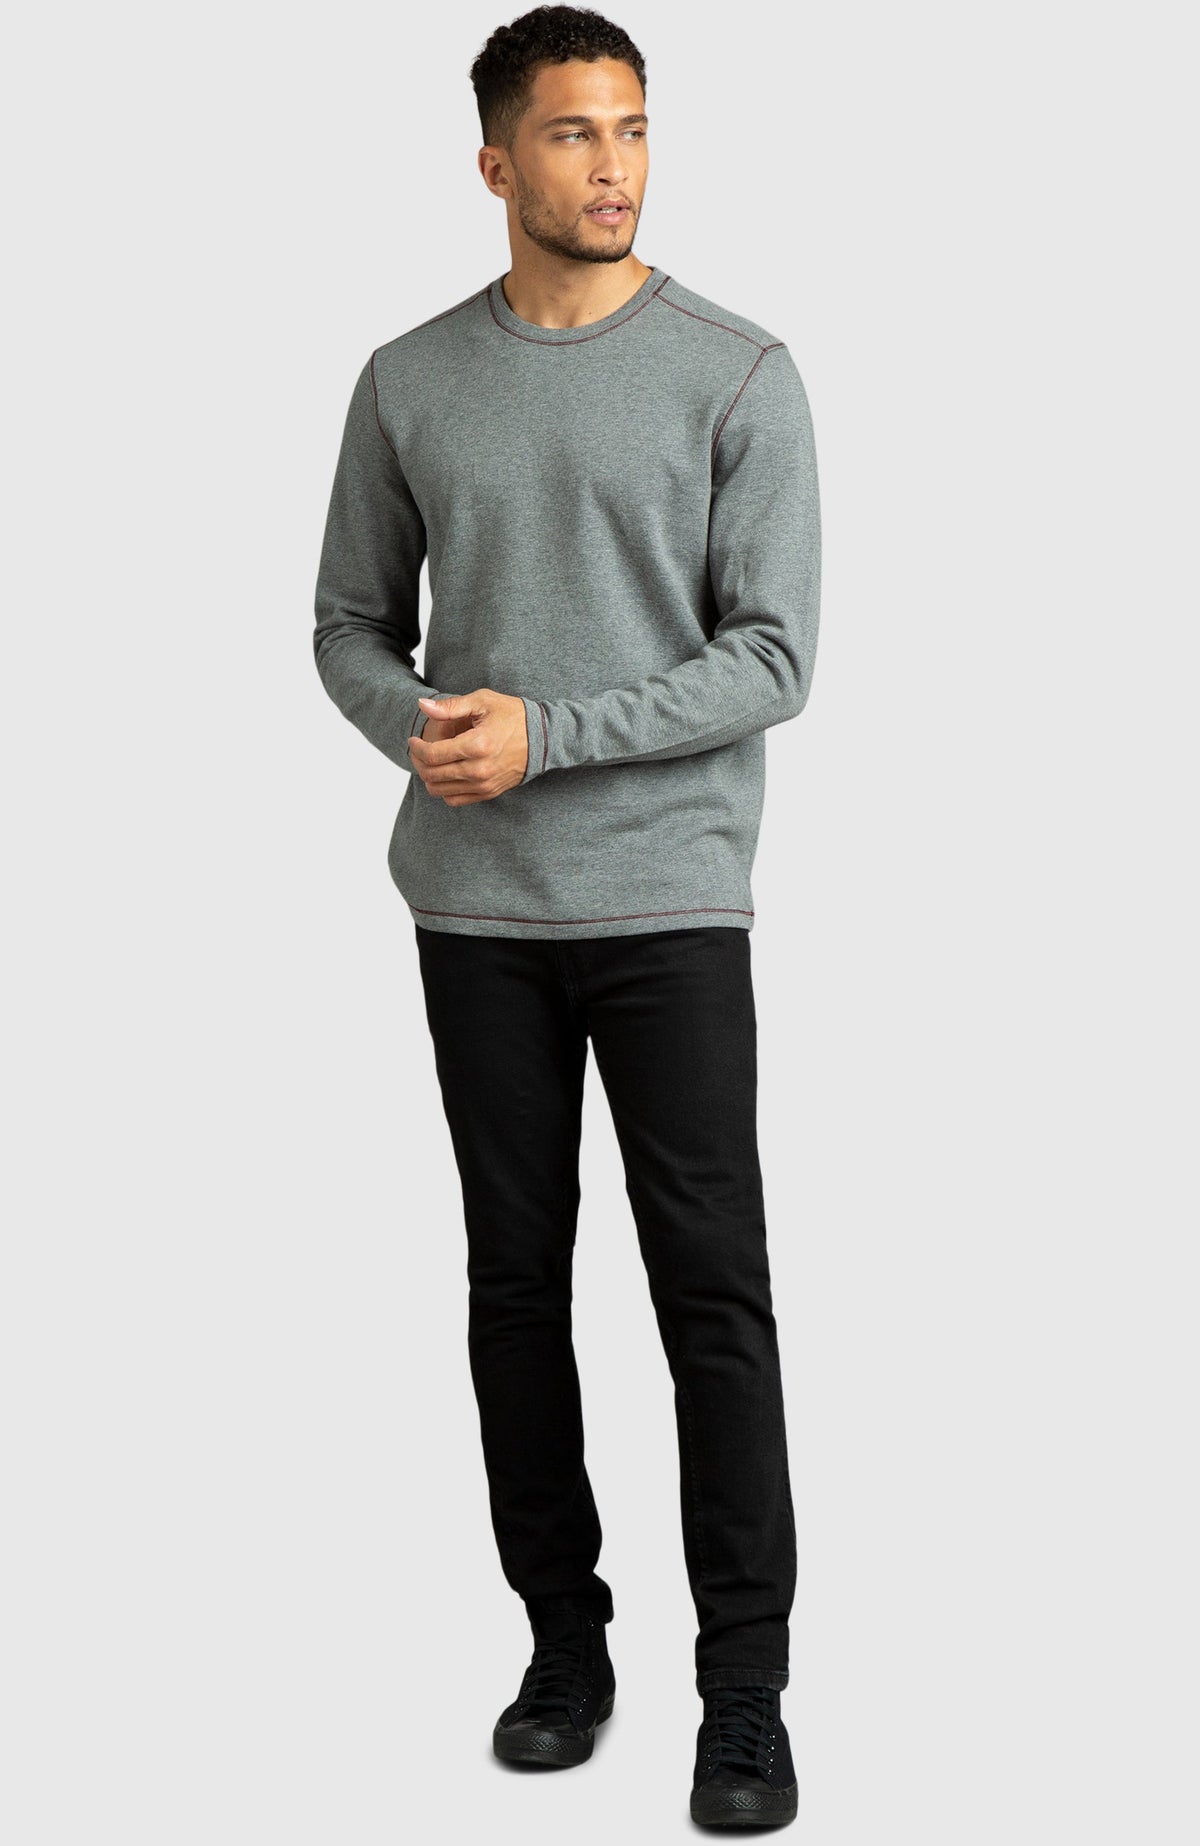 Heather Grey Double Knit Crewneck Sweatshirt for Men - Full